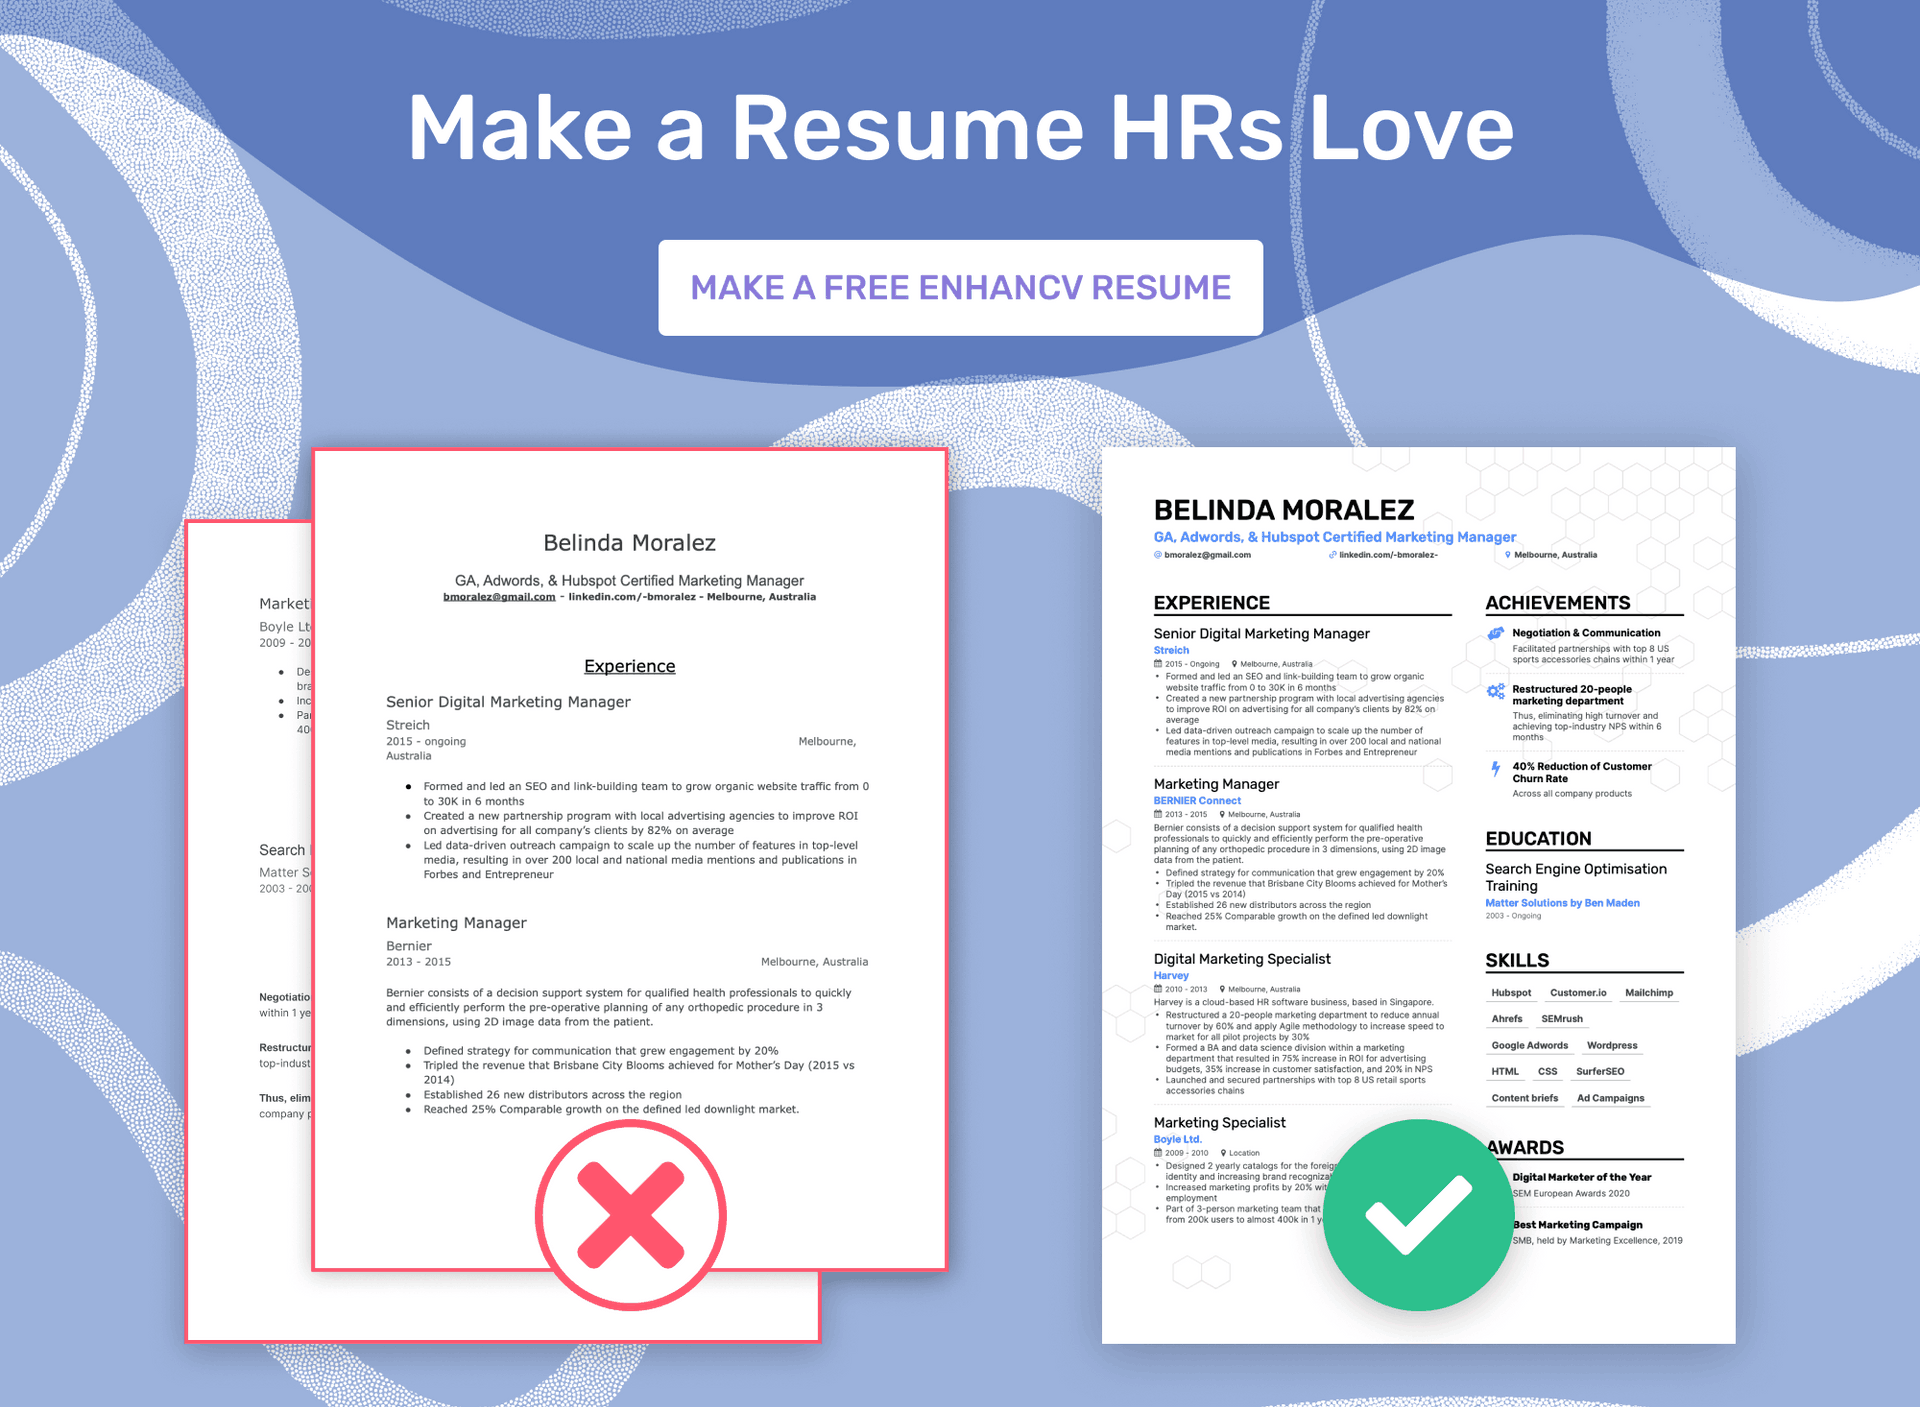 format of resume for international